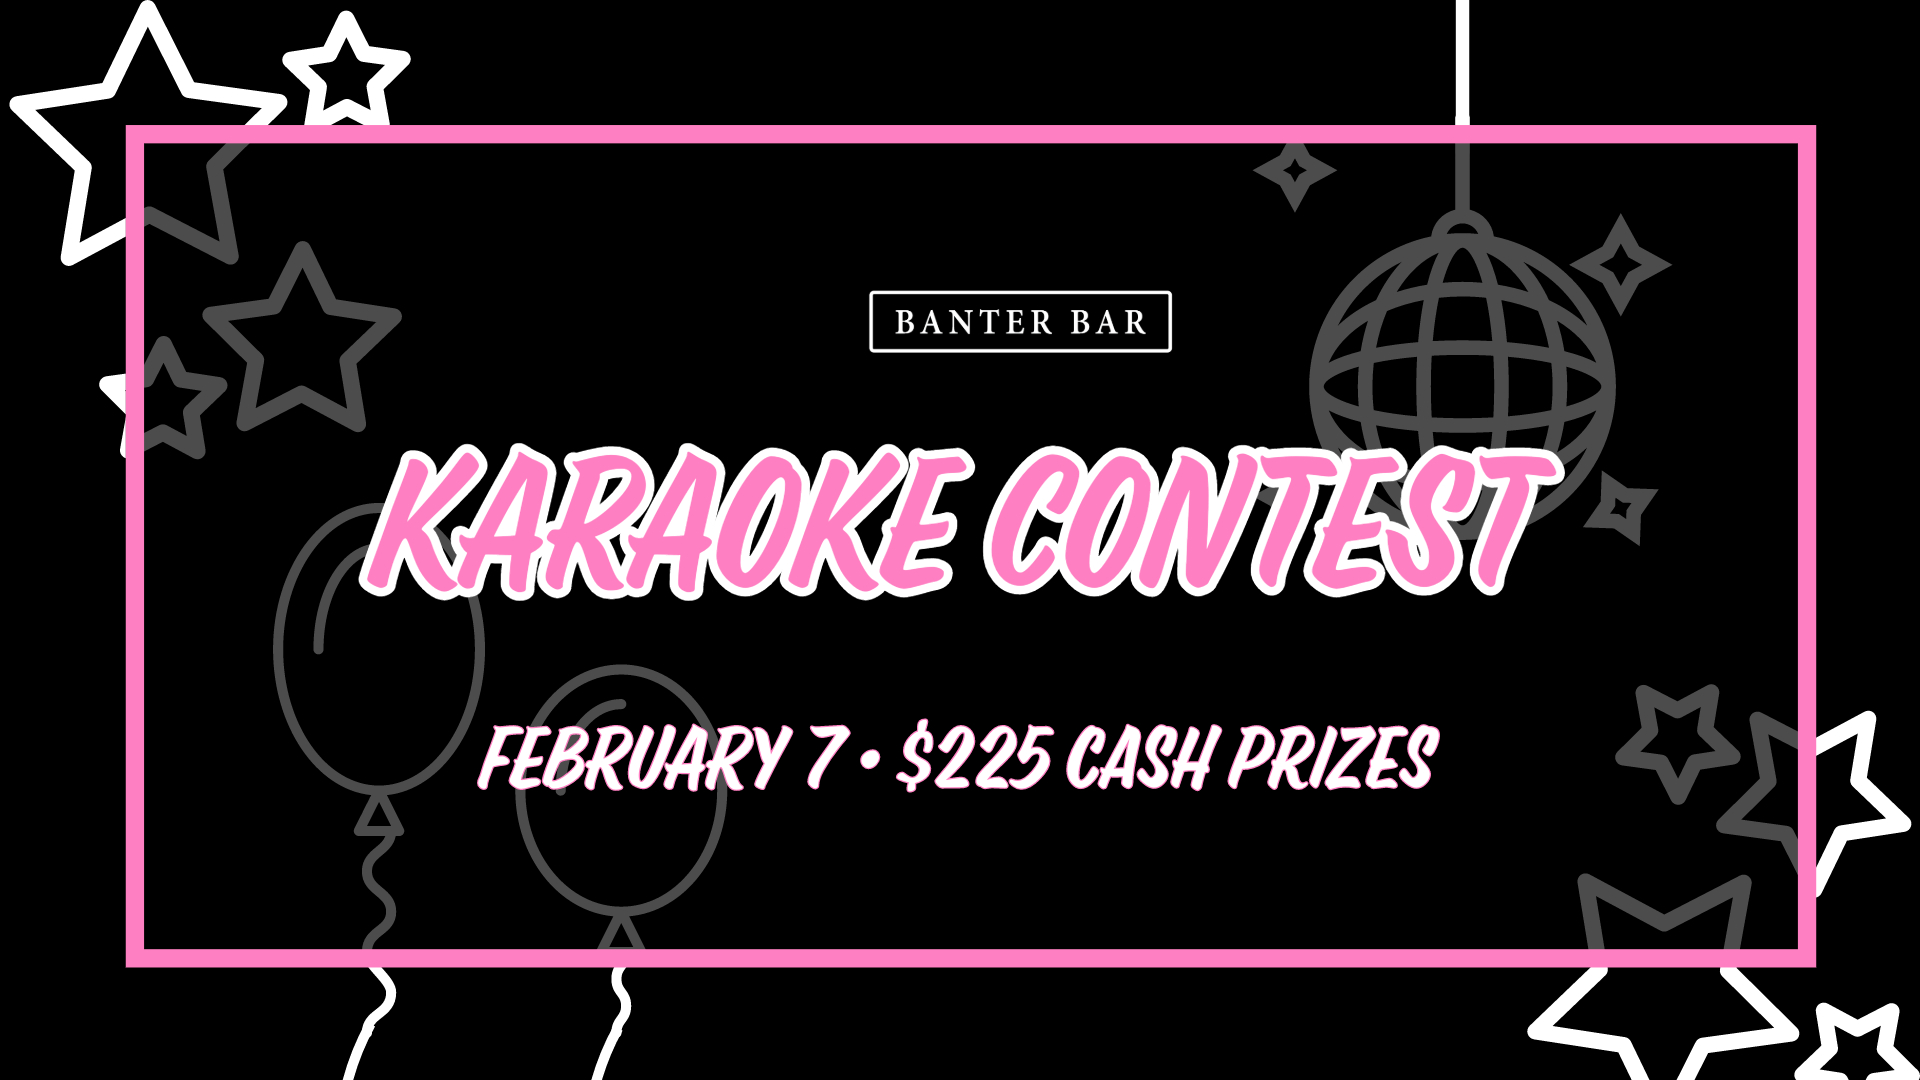 Karaoke Contest Event Image